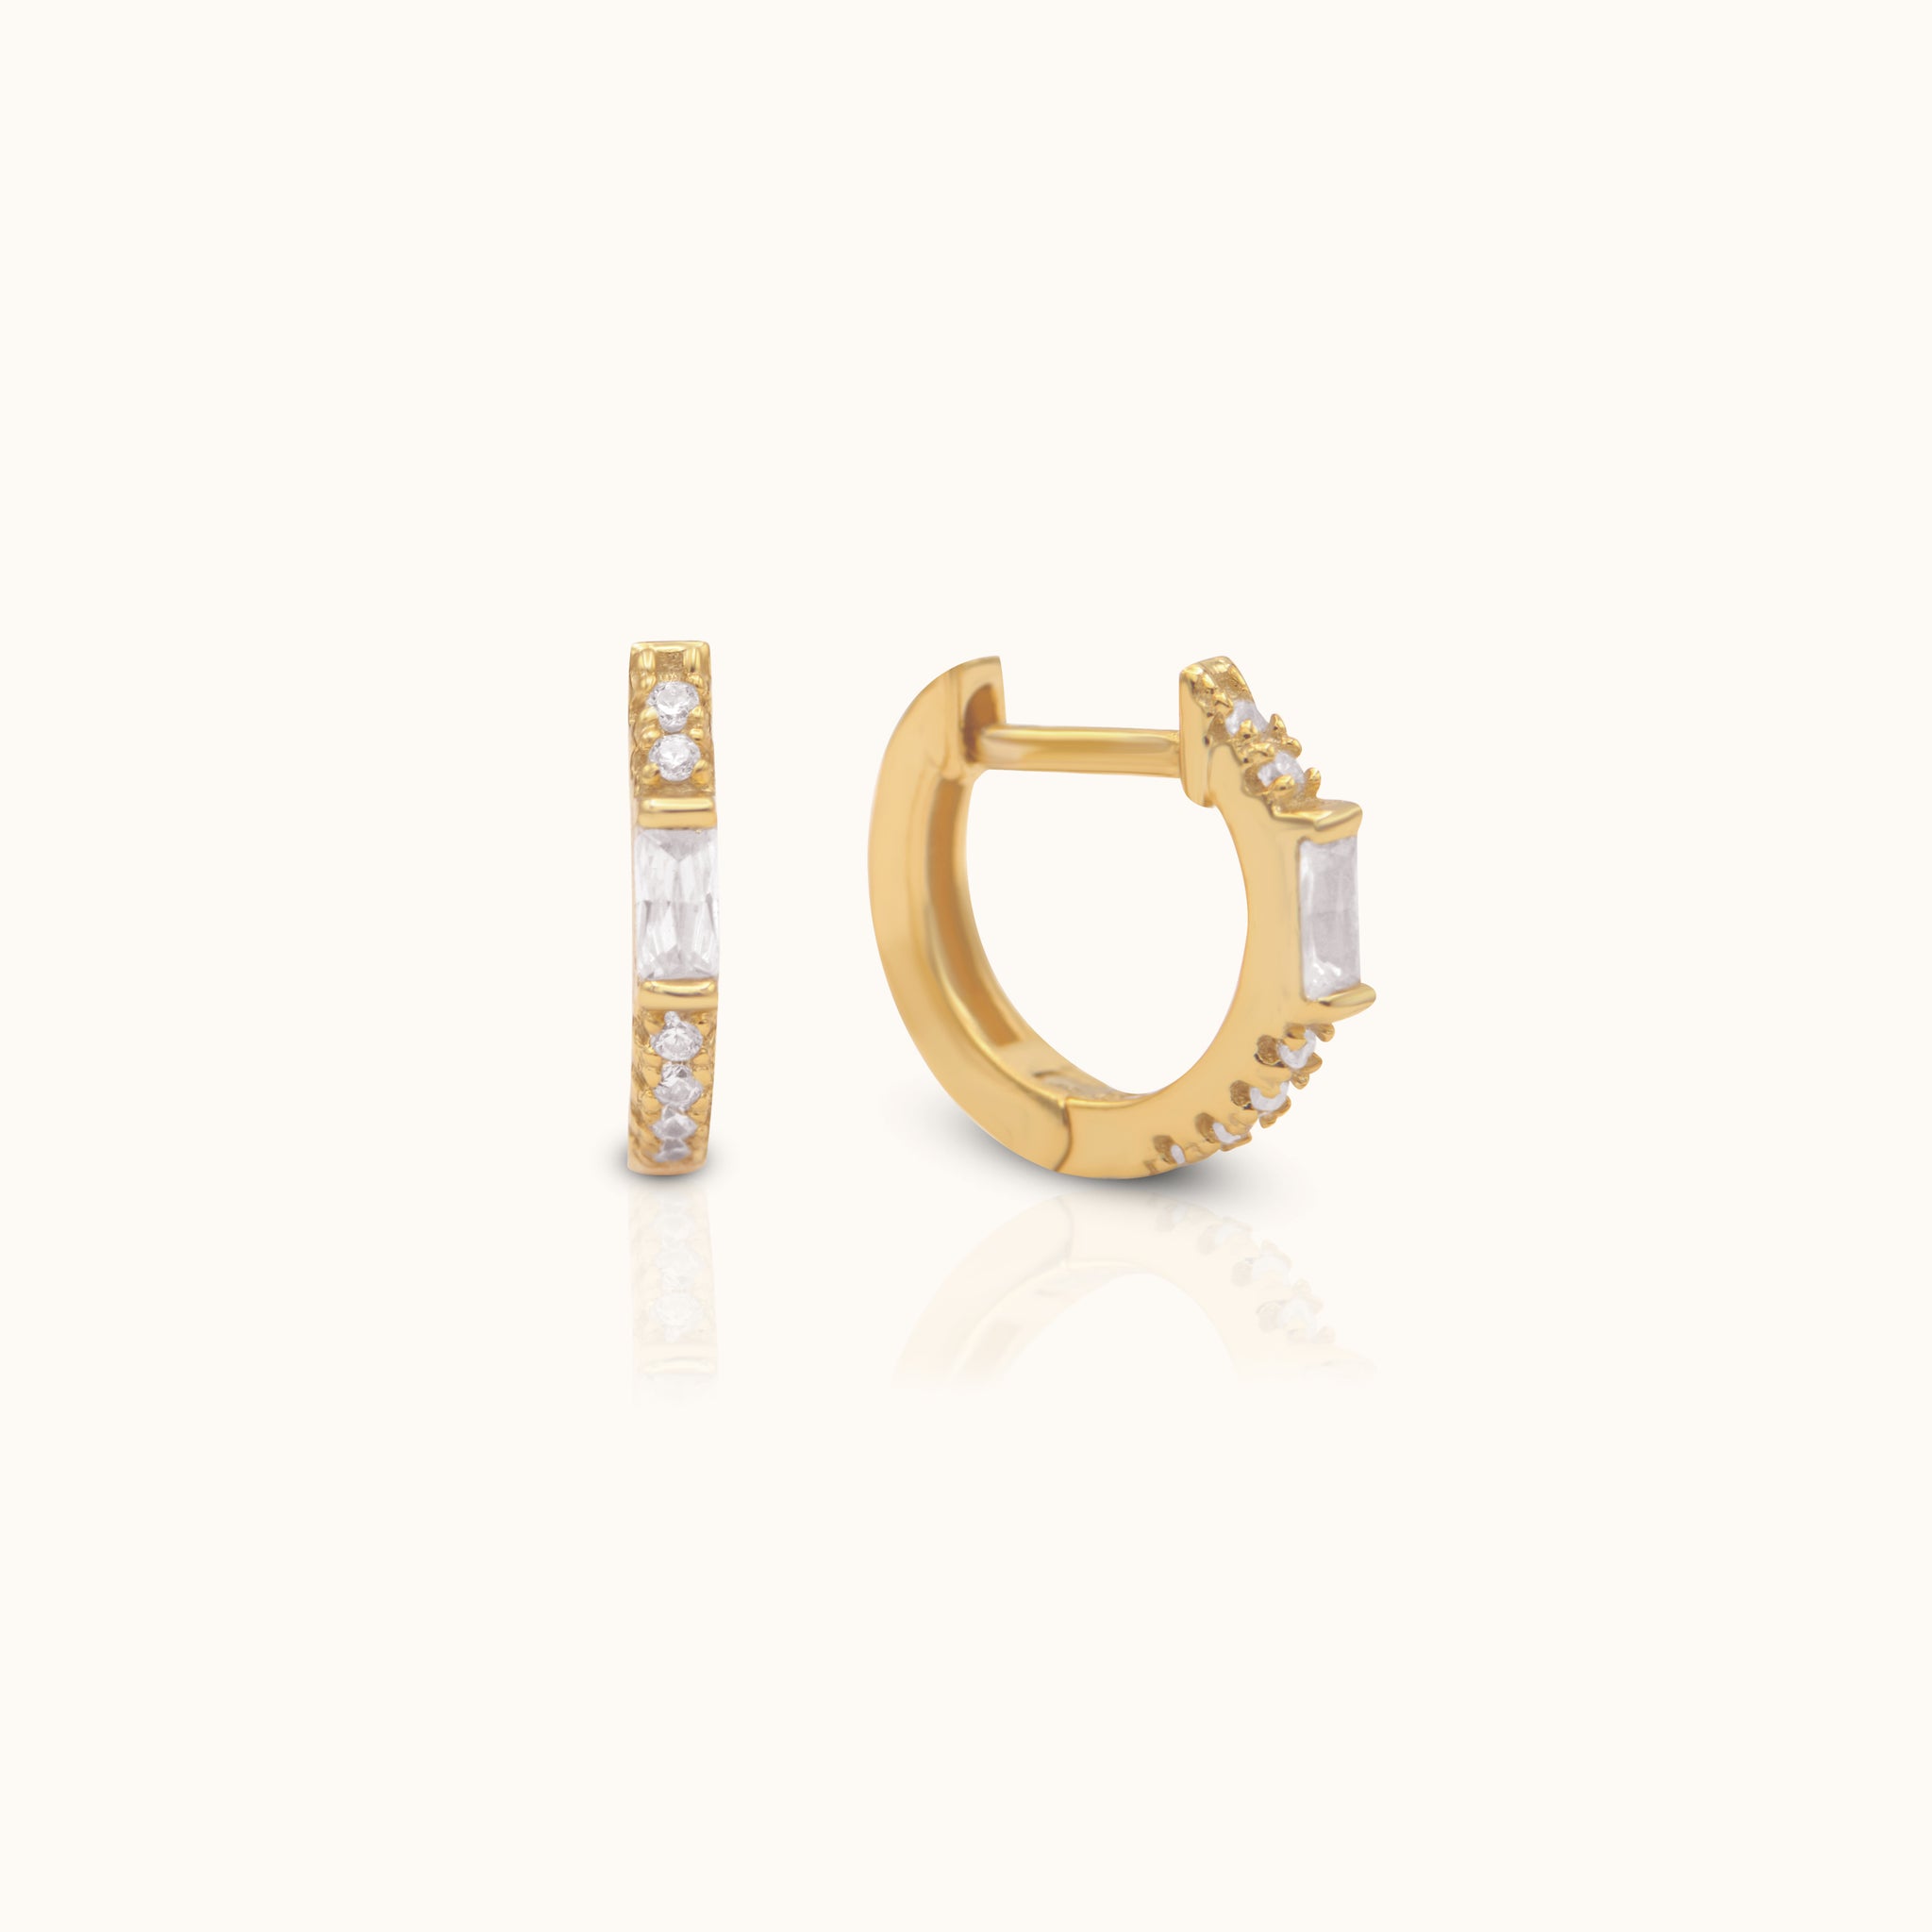 CZ Horseshoe Hoop Earrings Petite CZ Embellished Gold Cartilage Huggie Hoops by Doviana